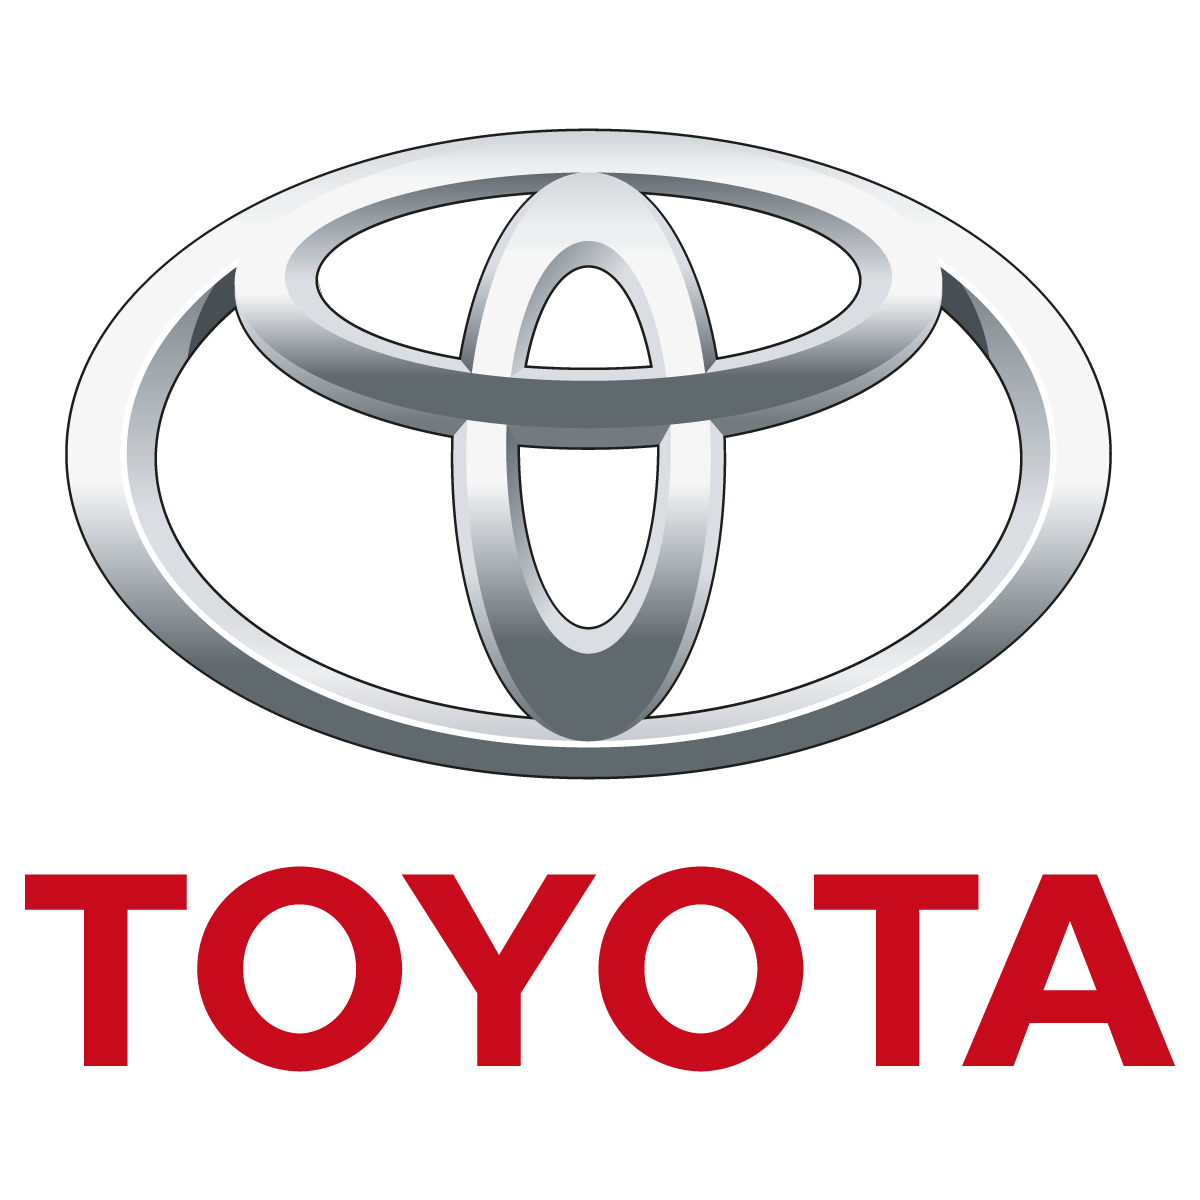 2018 Toyota Logo - Toyota Emblem Logo Vector | Free Vector Silhouette Graphics AI EPS ...